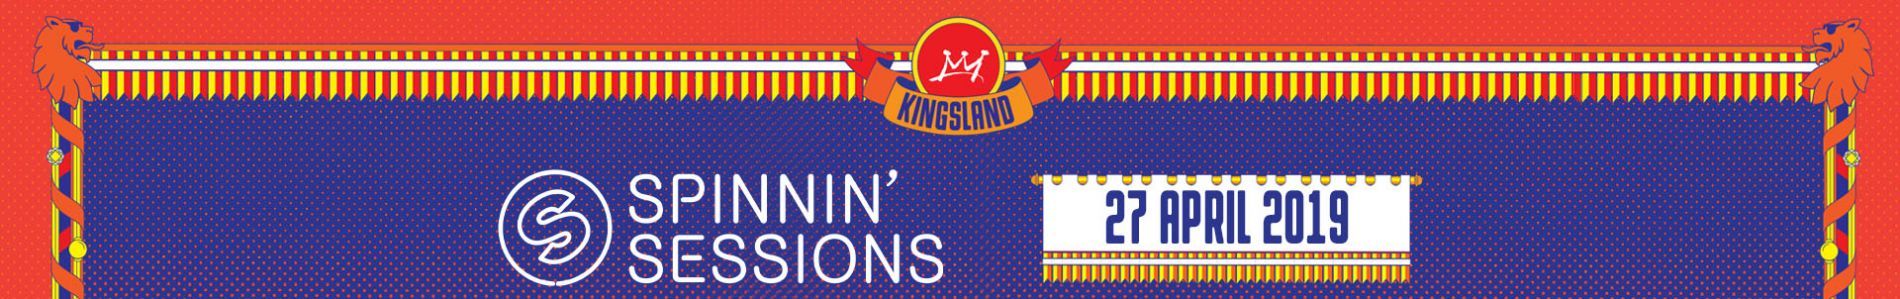 Spinnin' Sessions Spinnin' Sessions | Kingsland 2019